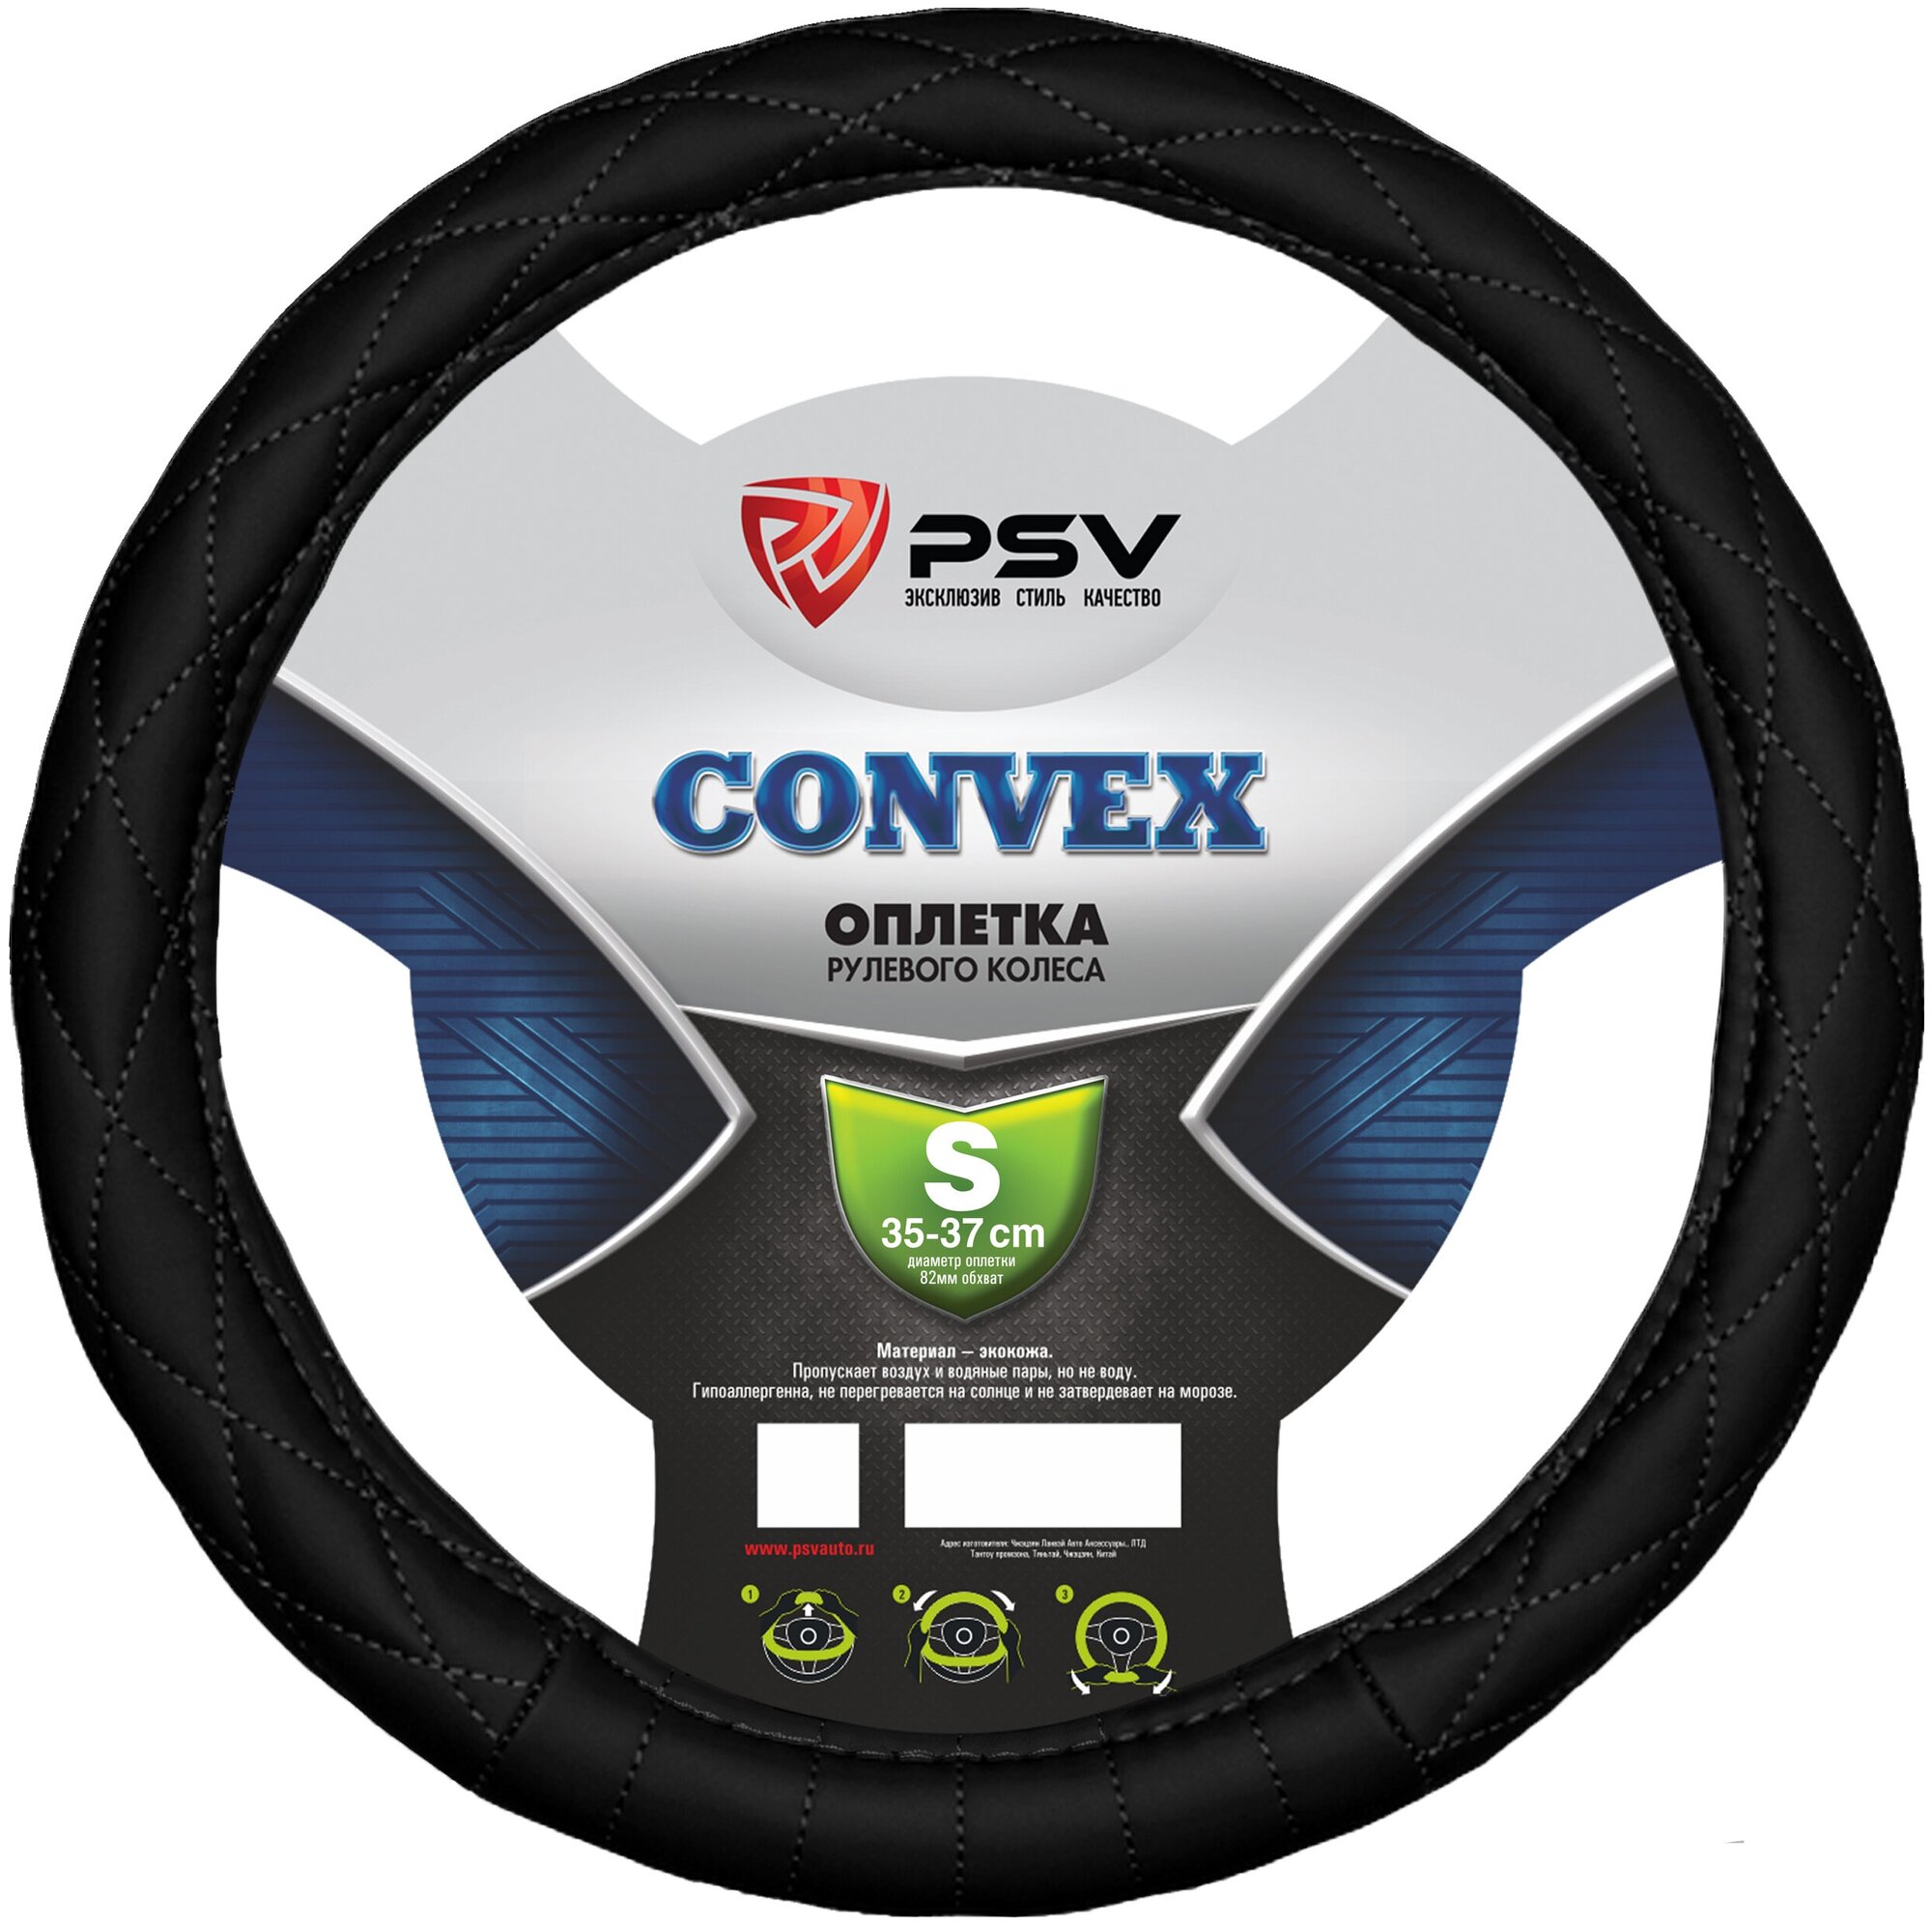 PSV CONVEX S